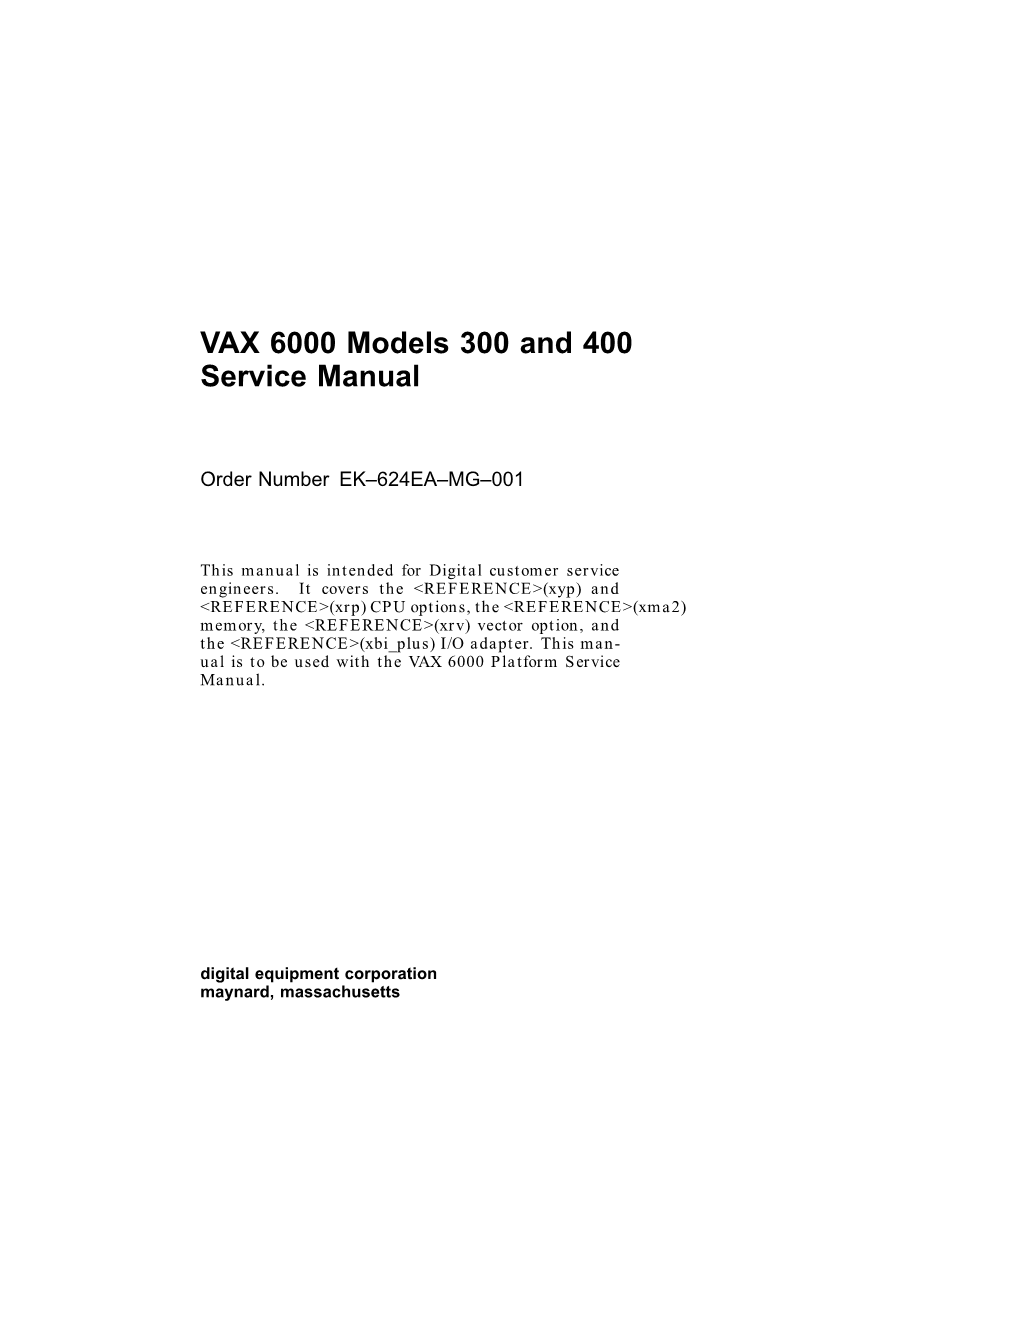 VAX 6000 Models 300 and 400 Service Manual